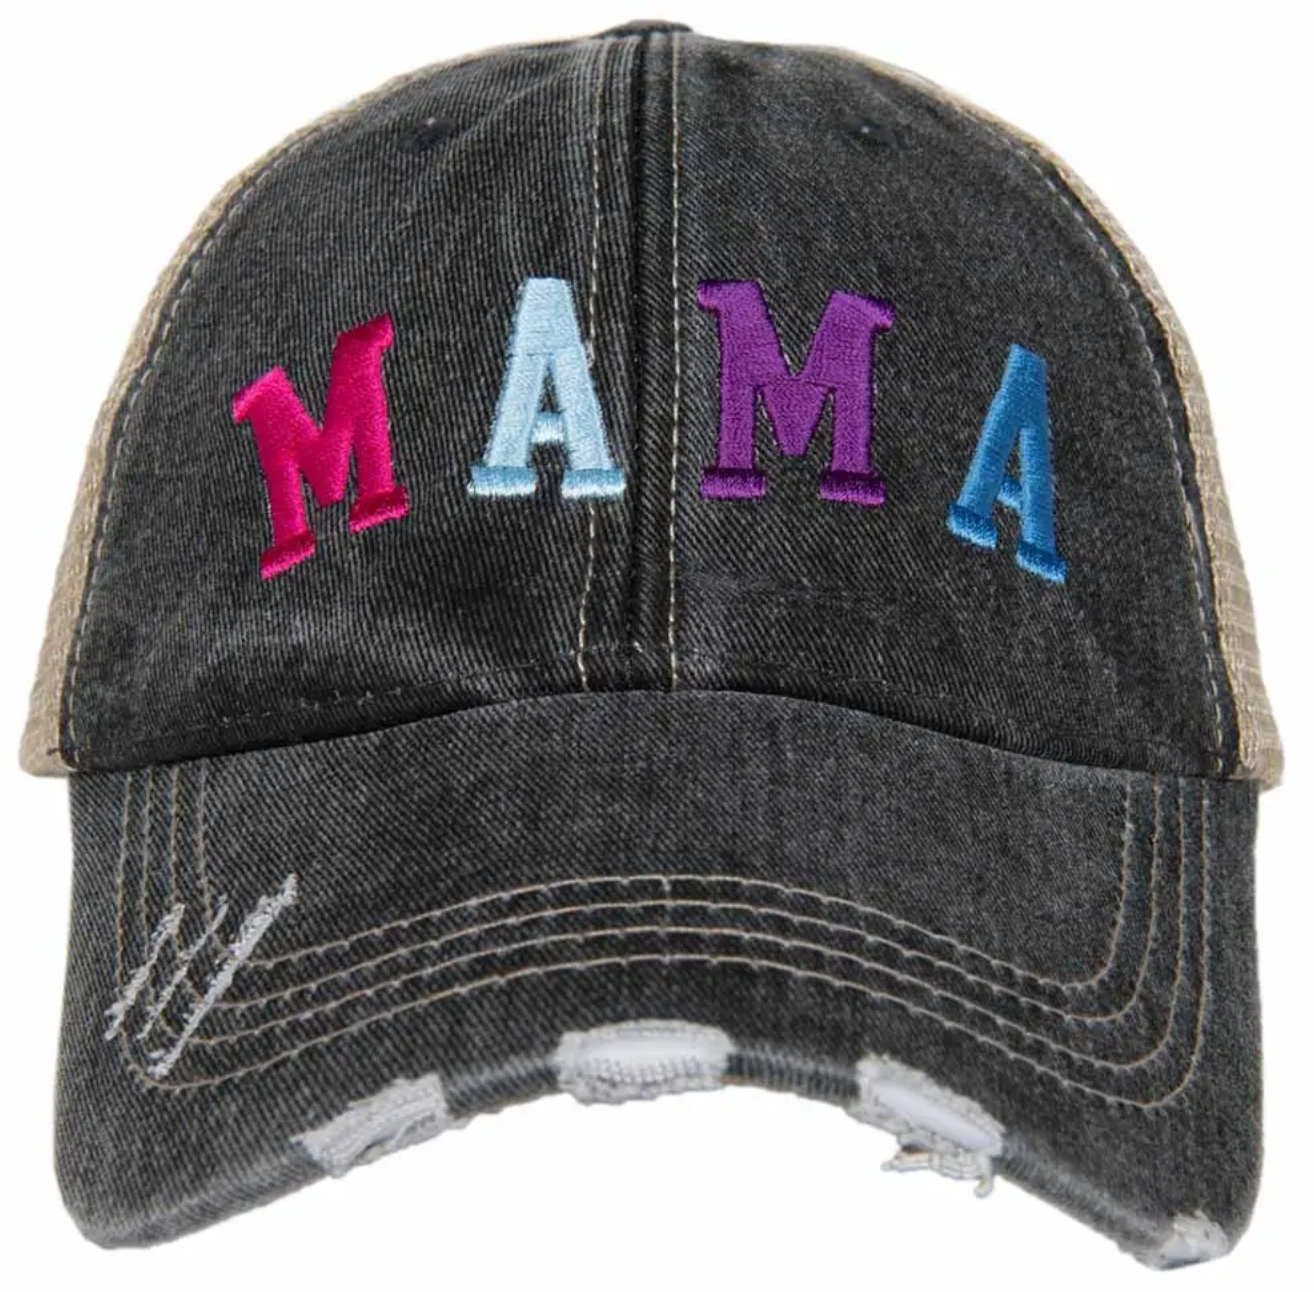 MAMA Multicolored Trucker Hat by Katydid